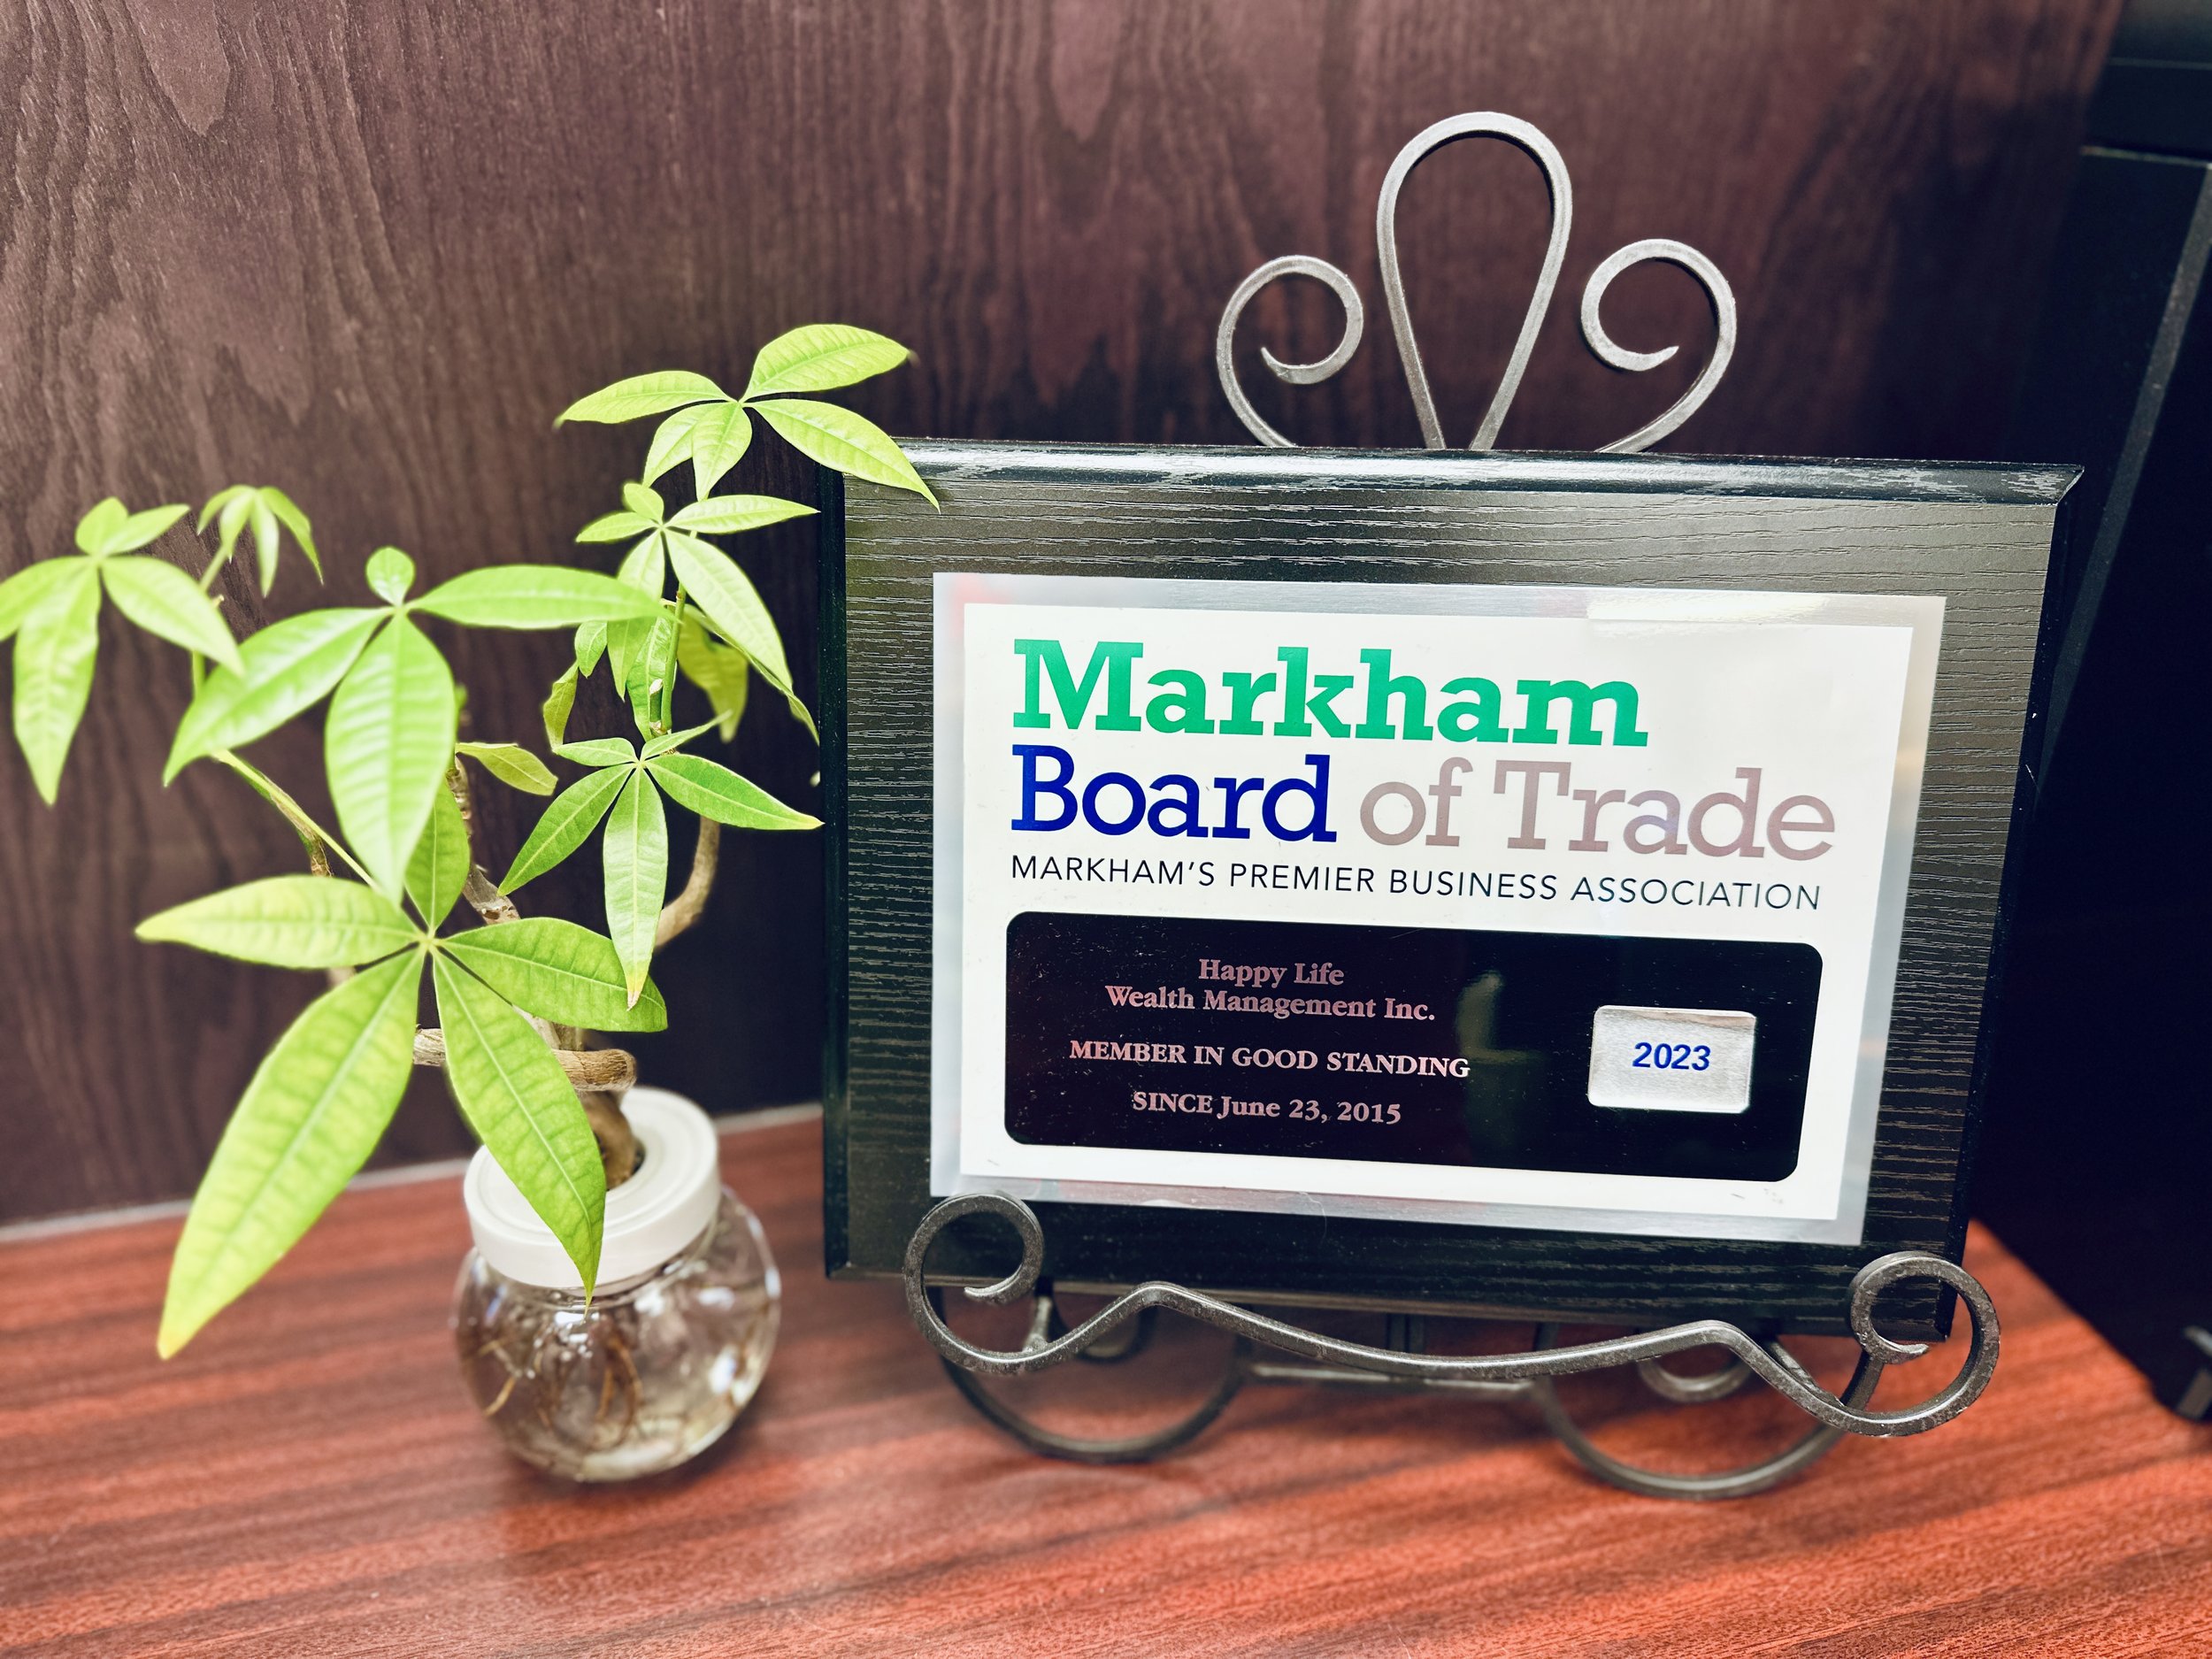 Markham board of trade.jpg